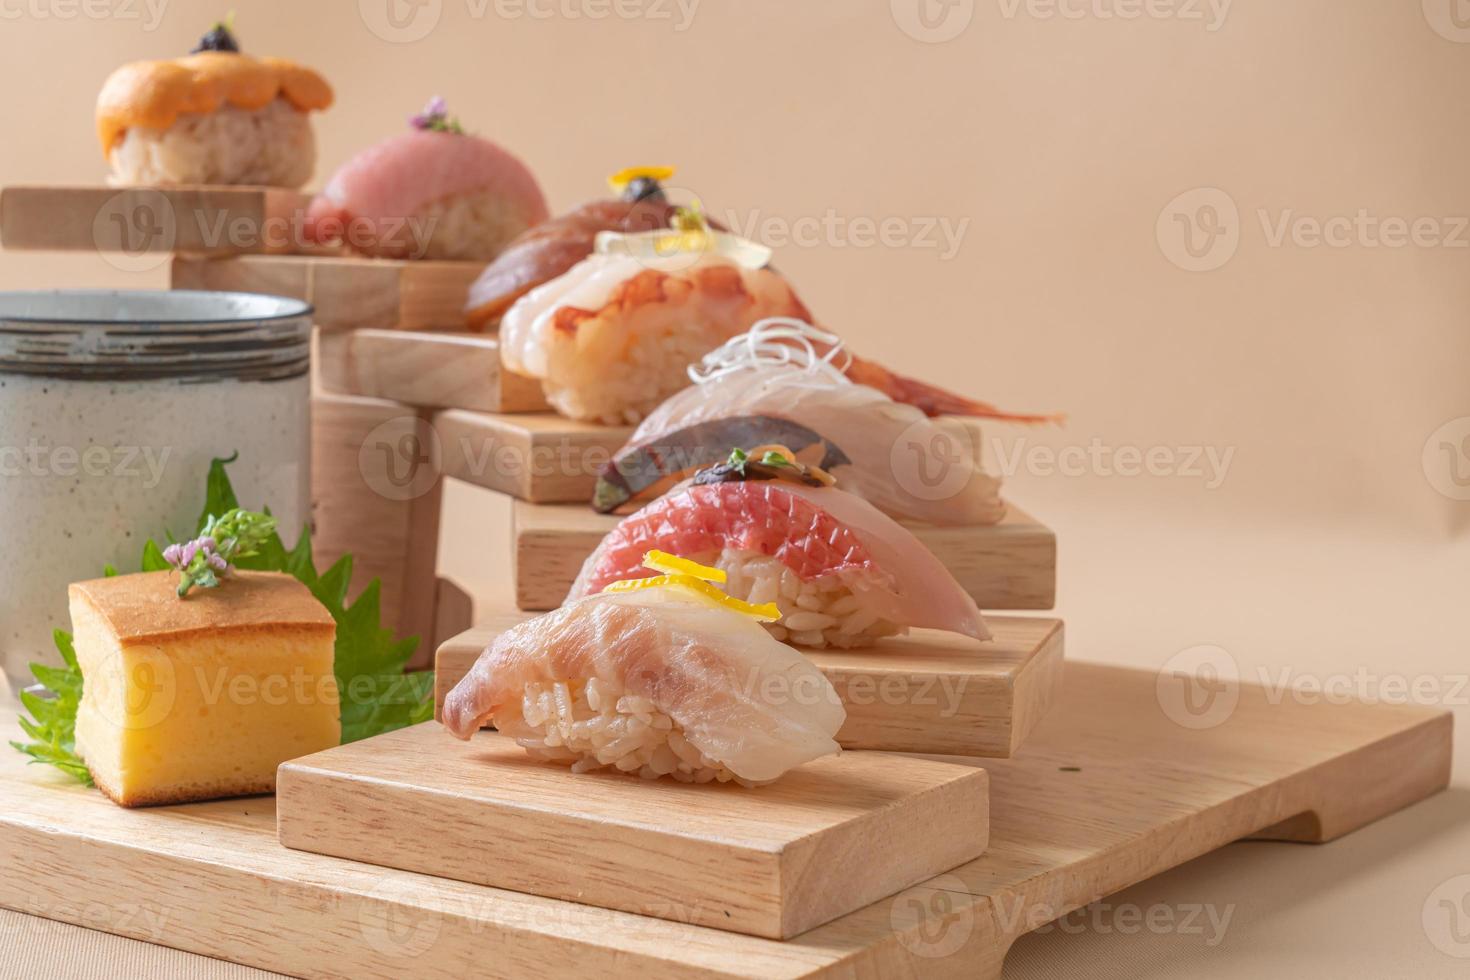 Conjunto de sushi premium omakase - comida japonesa foto